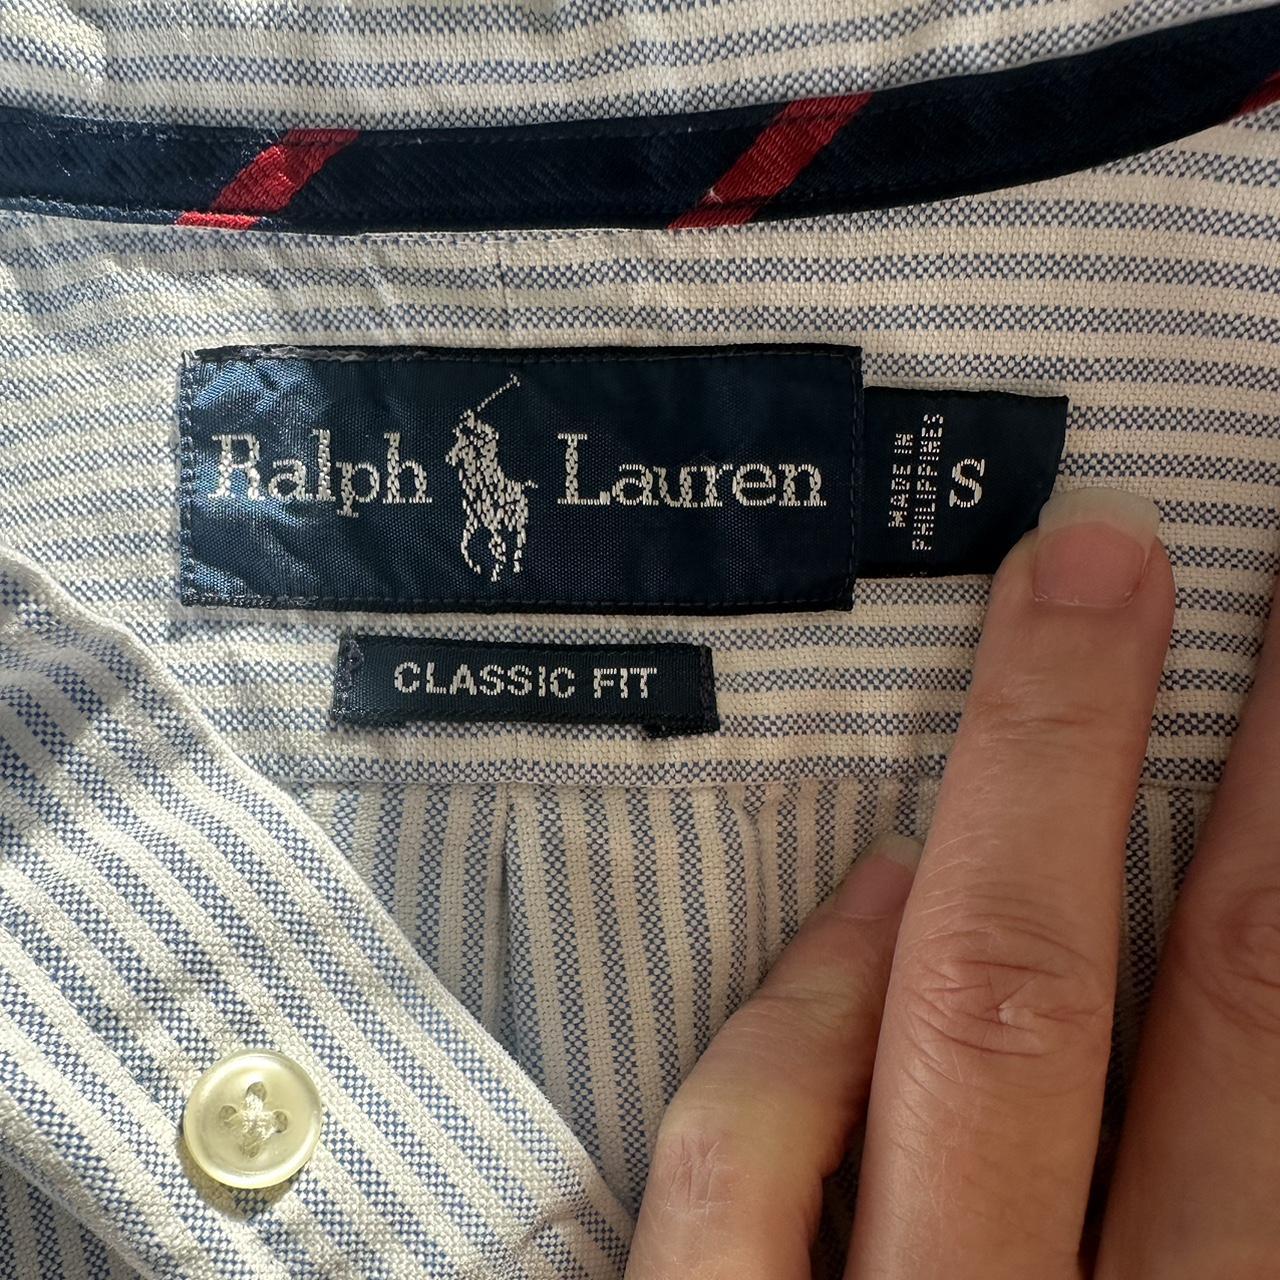 Polo Ralph Lauren Women's Blue and White Shirt